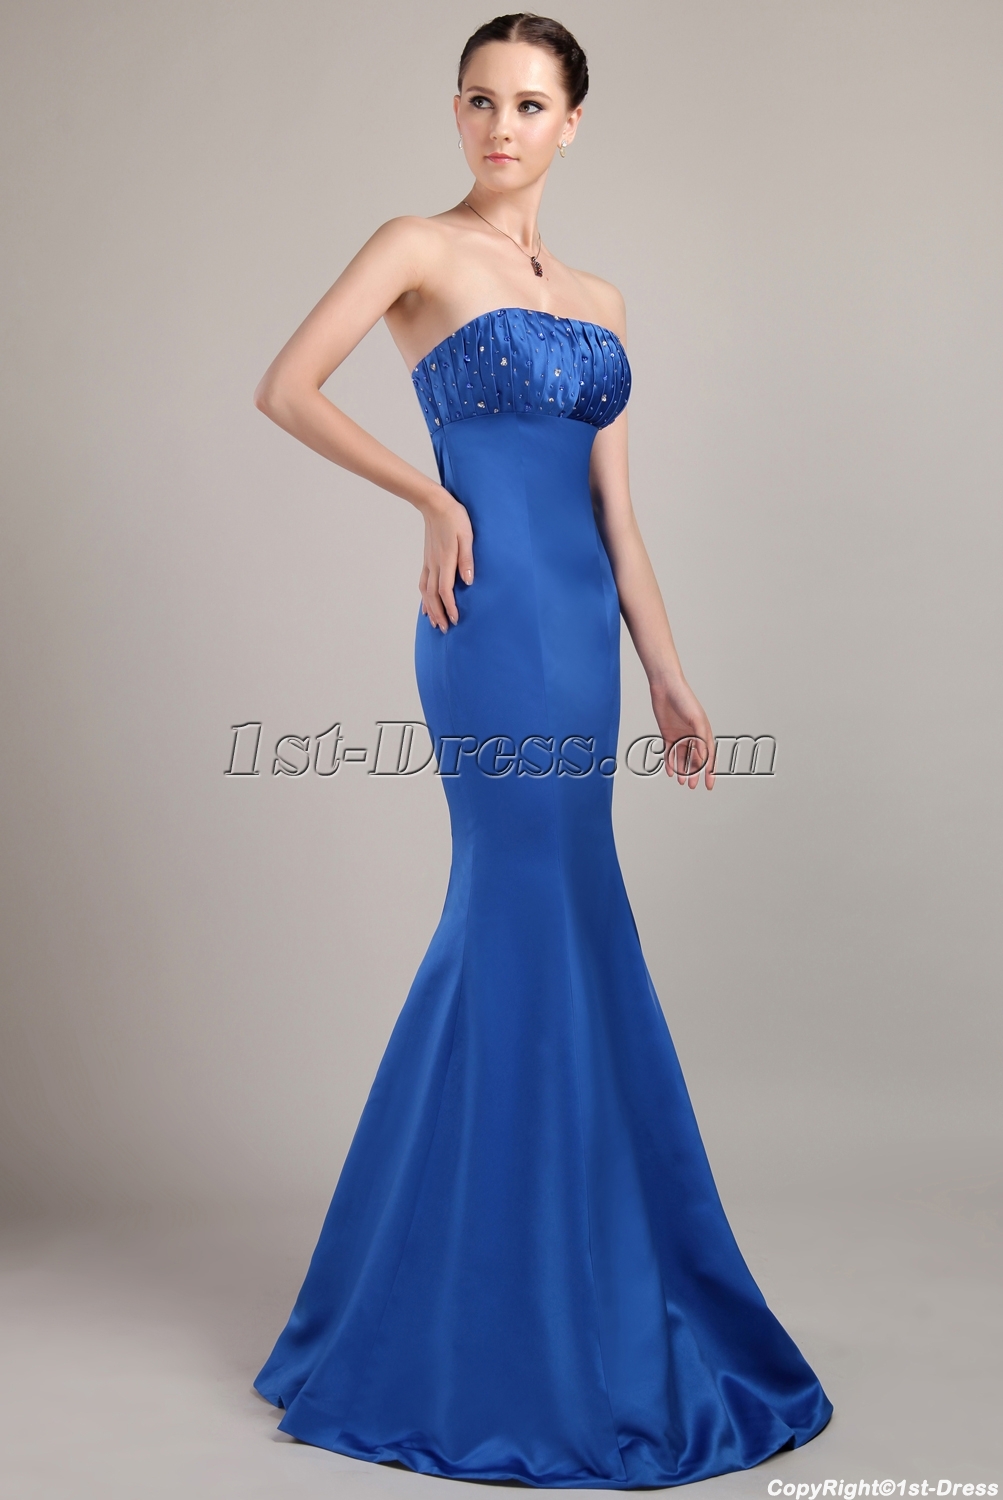 images/201304/big/2012-Royal-Blue-Sheath-Style-Bridesmaid-Dresses-IMG_3082-1051-b-1-1366110276.jpg